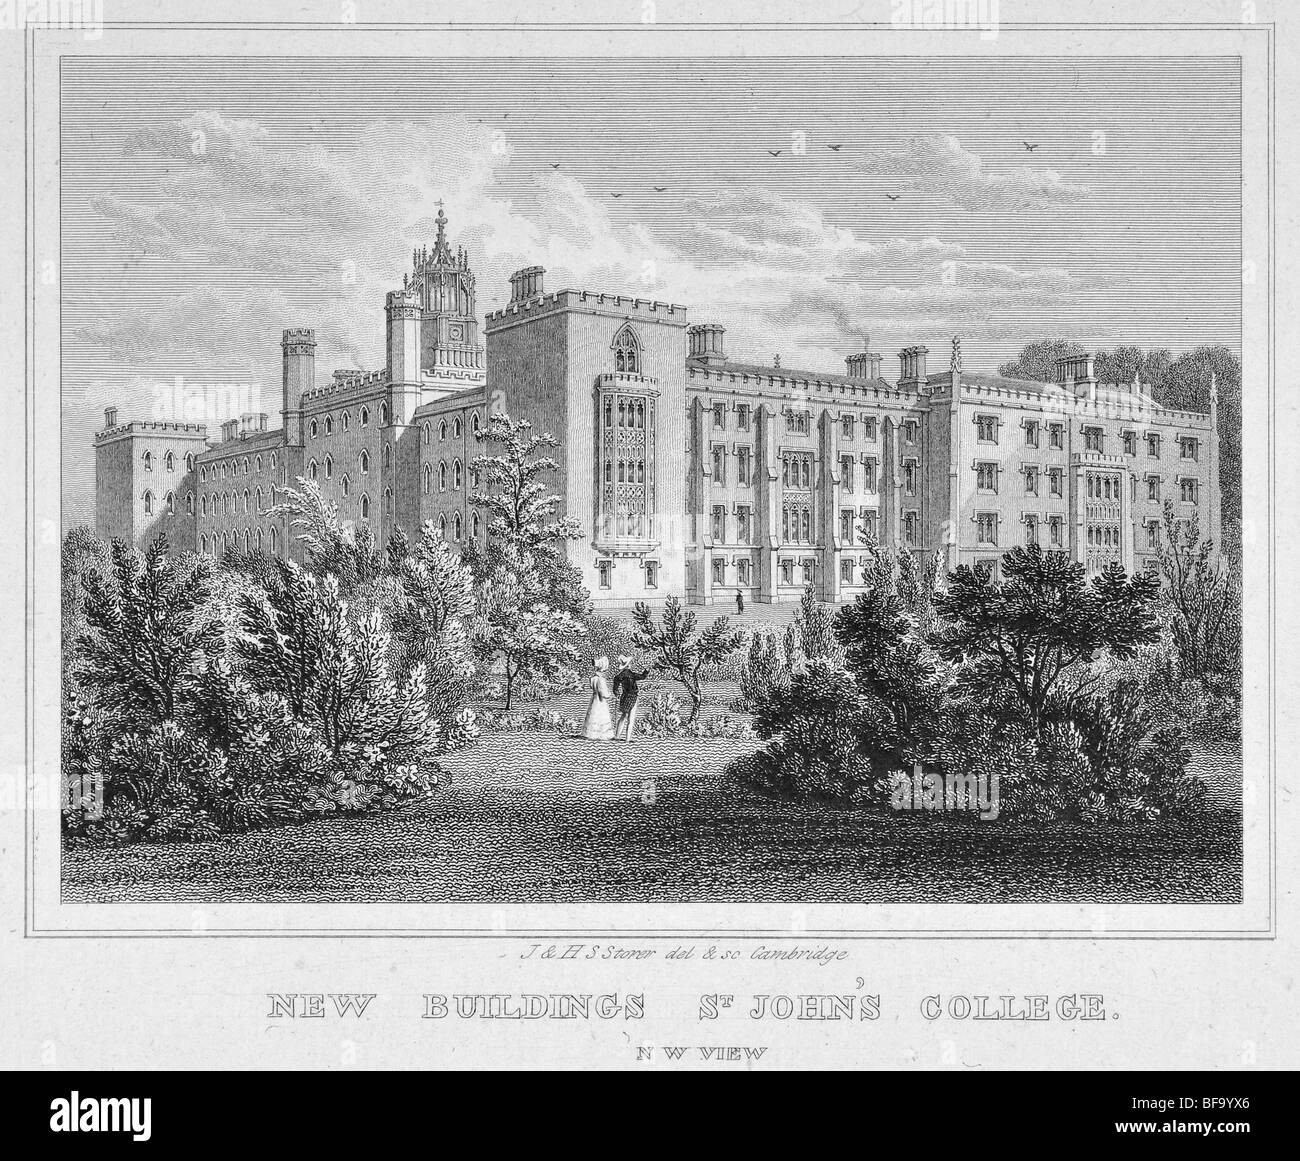 St John’s College, Cambridge – New Buildings, N-W view Stock Photo